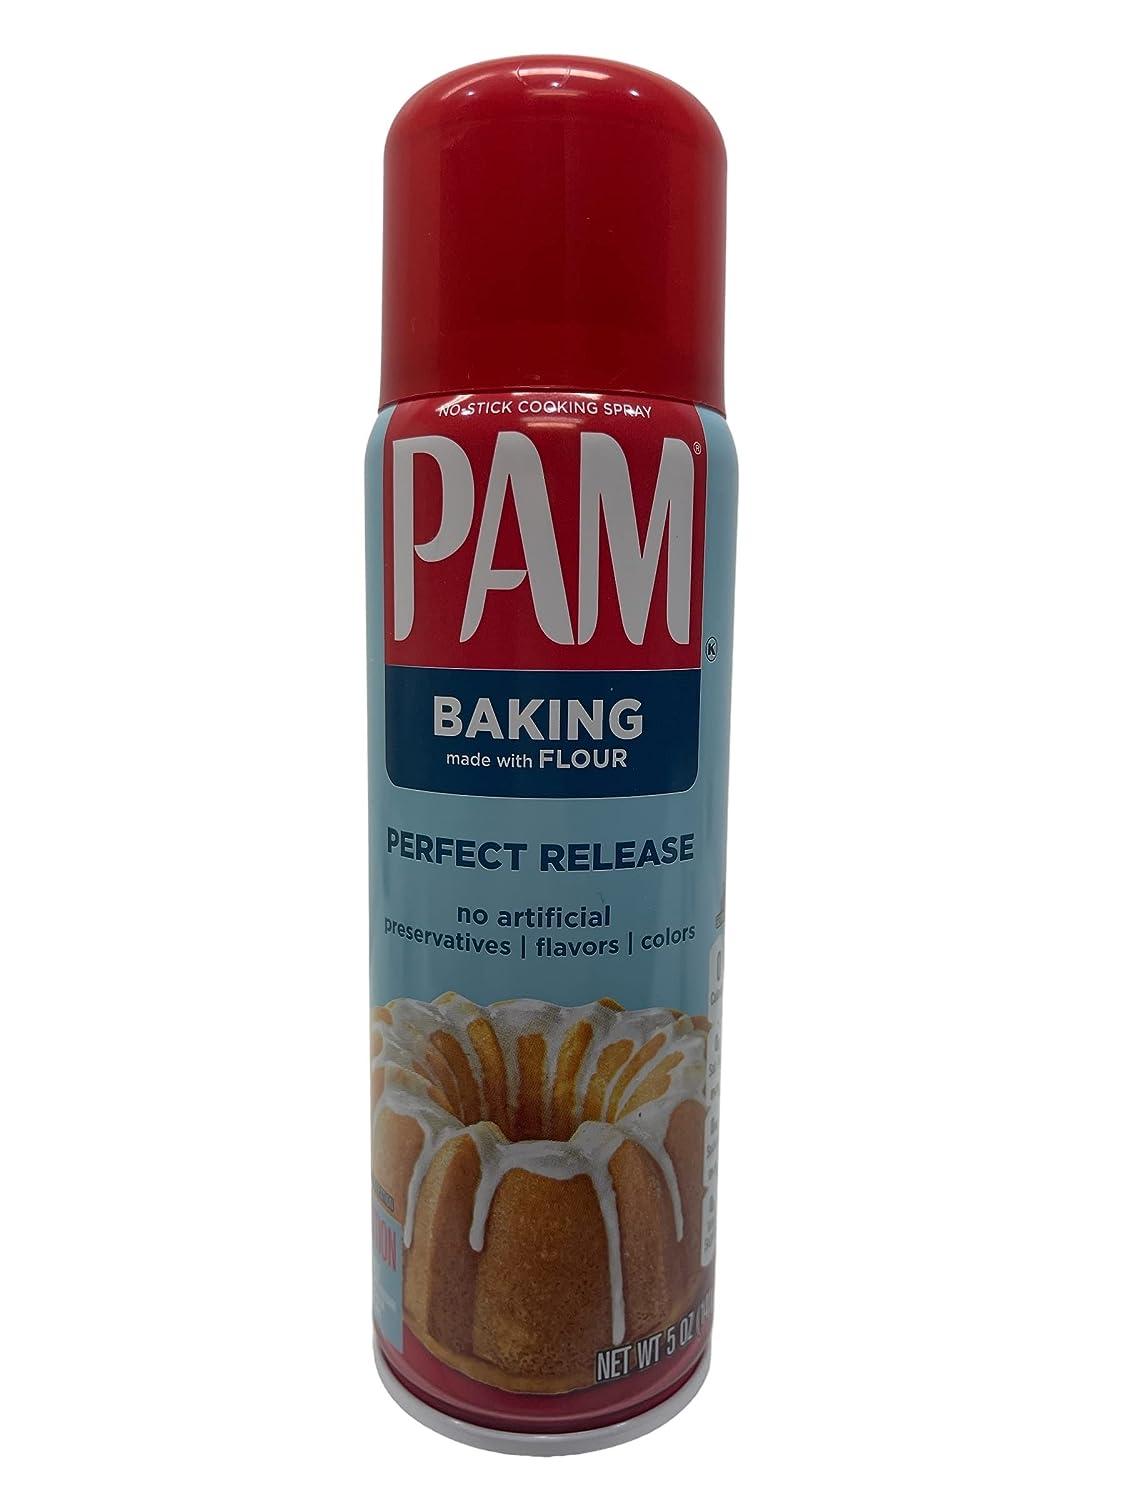 PAM Original Cooking Spray, Cooking & Baking Spray, 8 oz